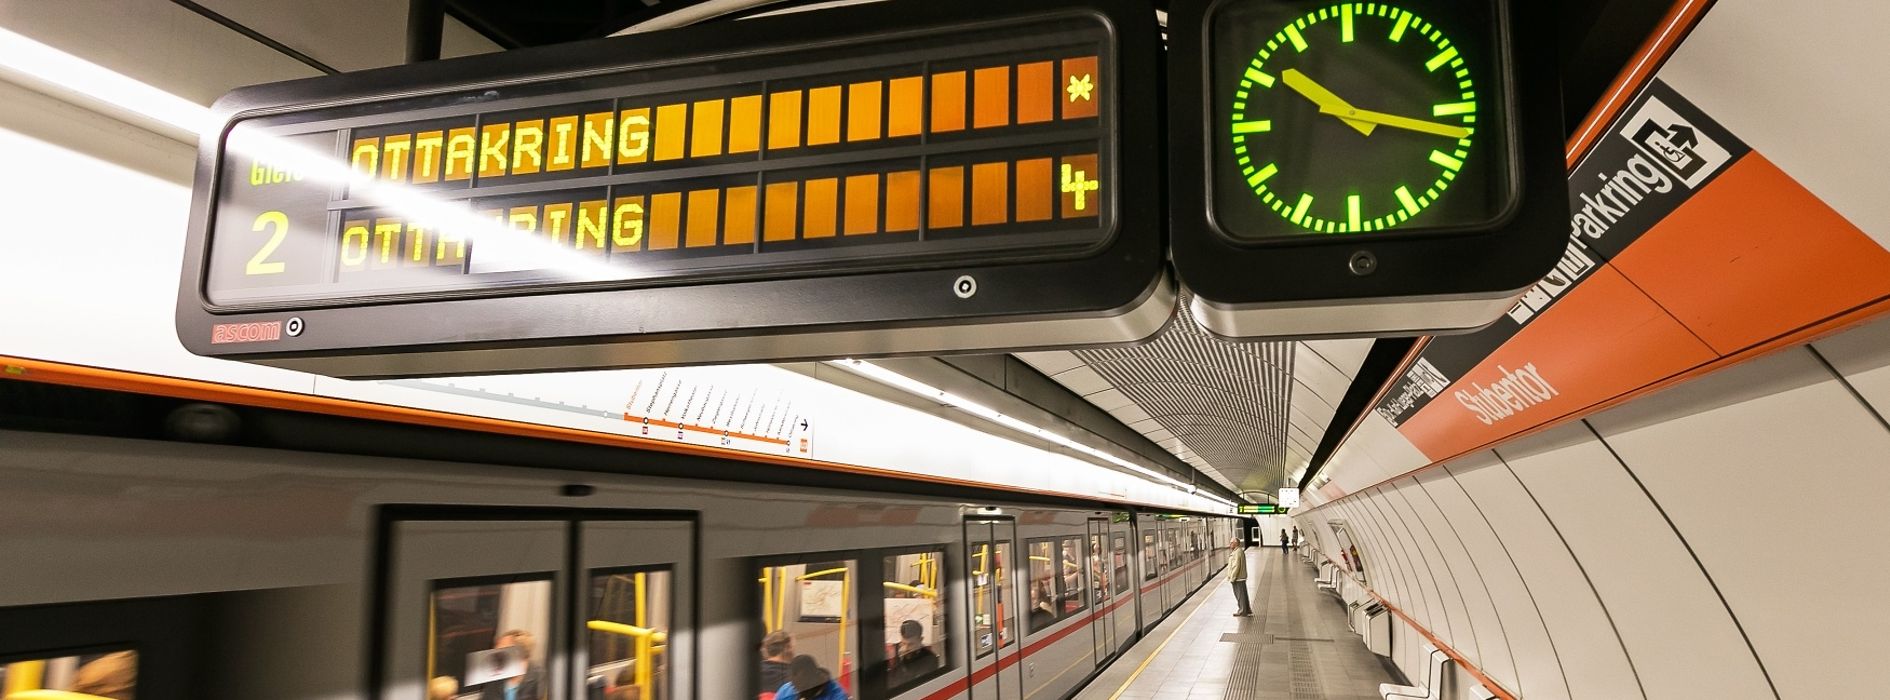  Aviso informativo del metro de Viena con reloj